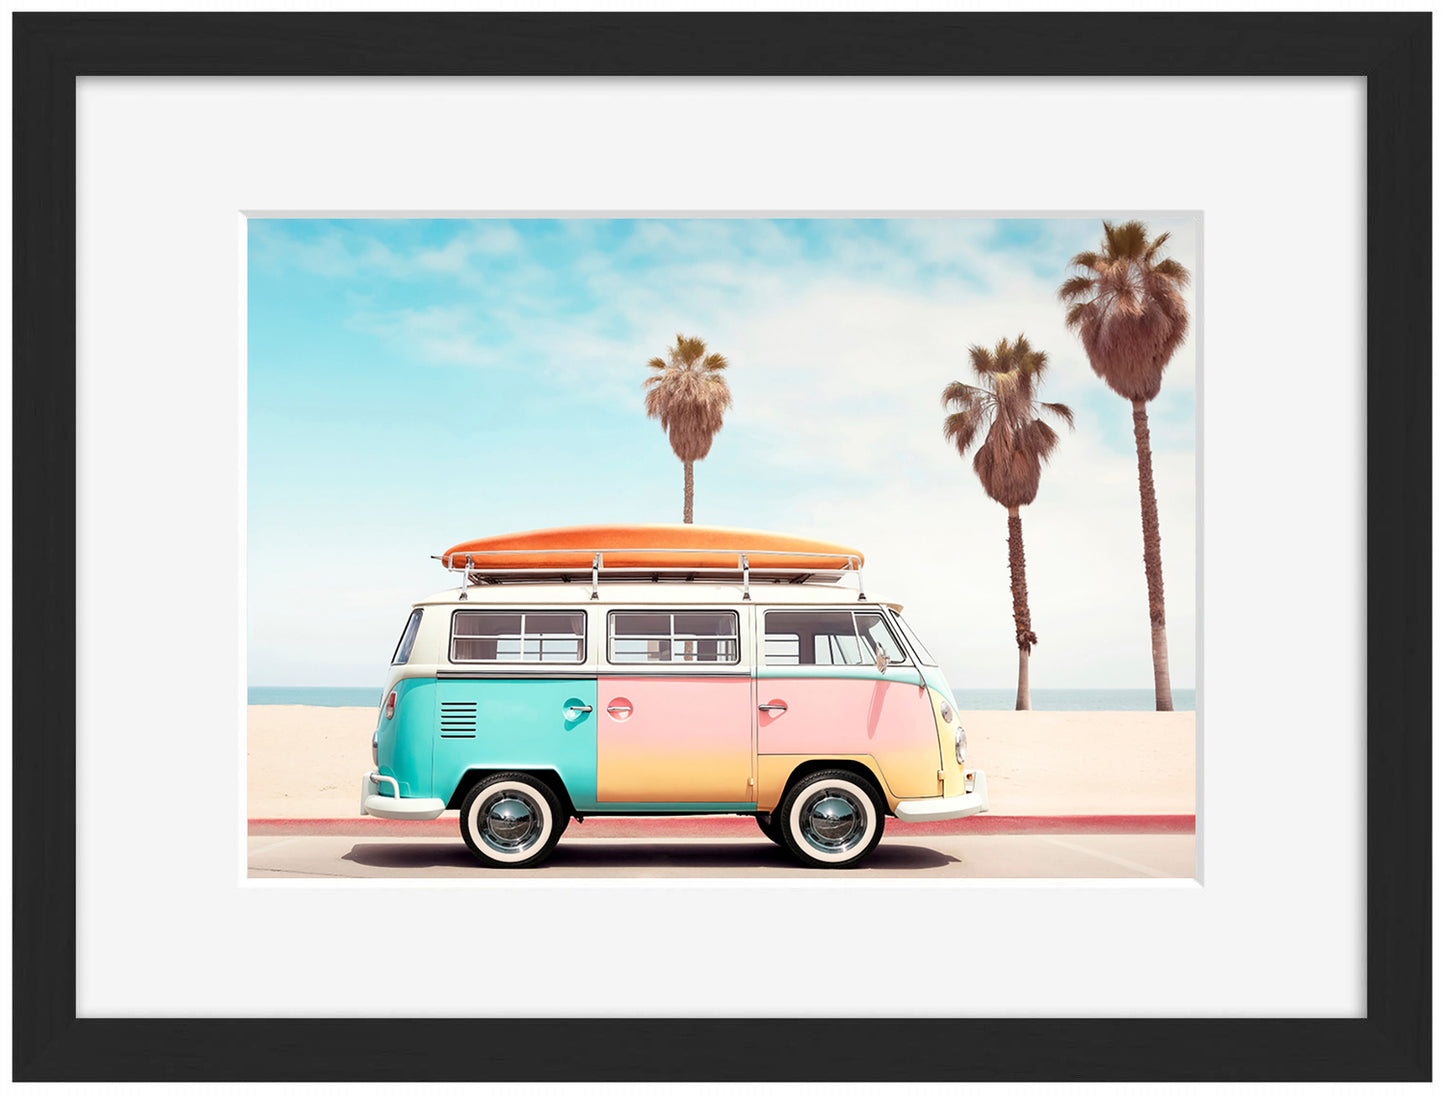 Philippe Hugonnard -  California Dreaming VW Van on the Beach